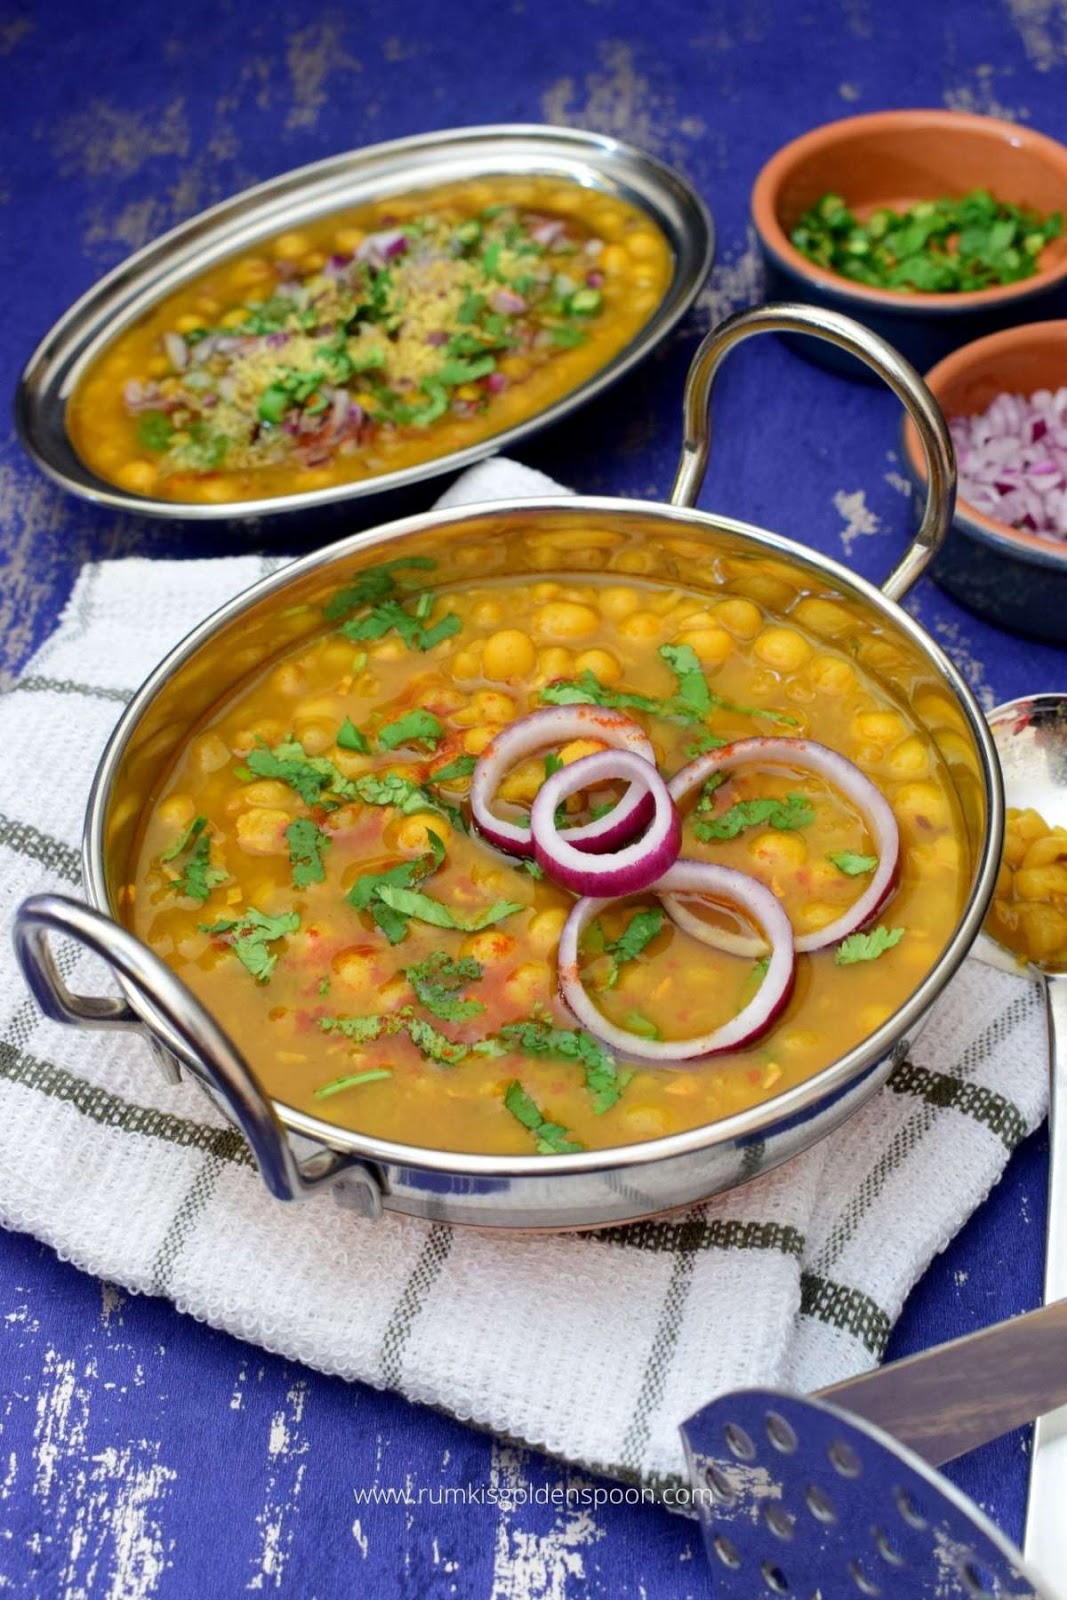 recipe for ragda, ragda, ragda recipe, ragda for pani puri, ragda chaat, how to make ragda, how to make ragda for pani puri, how to make ragda at home, ragda chaat recipe, ragda pattice, ragda pattice recipe, Indian chaat recipe, Indian chaat recipes, chaat recipe, recipe for chaat, recipes of chaat, chaat papdi recipe, chaat recipe Indian, indian street food, list of indian street food, recipes for Indian street food, recipes of Indian street food, best Indian street food recipes, Indian street food recipes, Indian snack recipe, Indian snack recipes, Indian snacks recipes for evening, Indian snacks easy recipes, Rumki's Golden Spoon